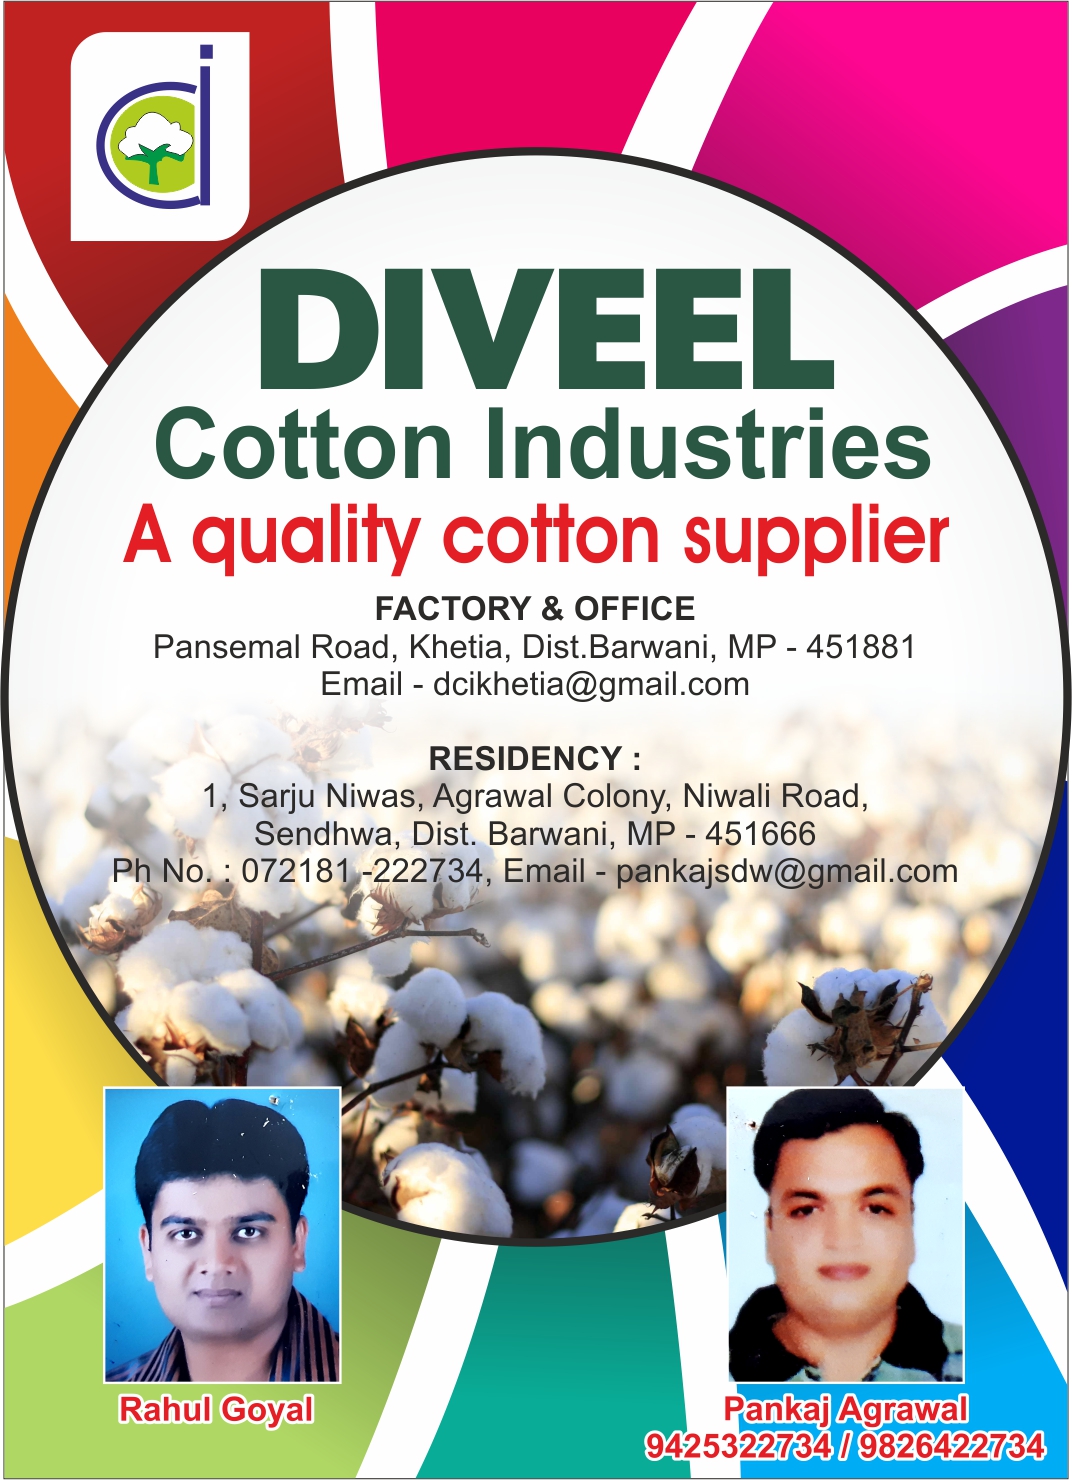 Diveel Cotton Industries